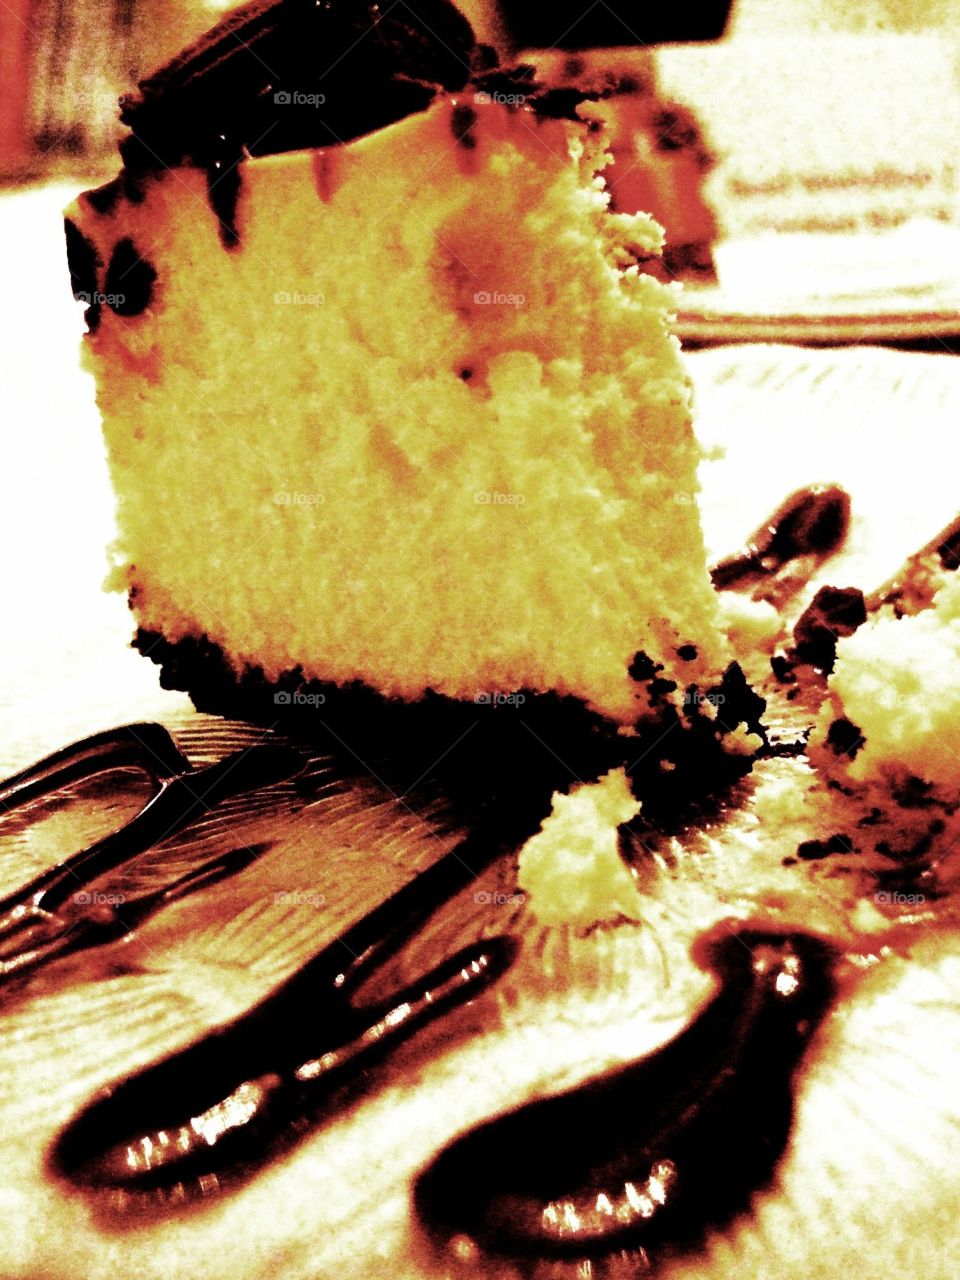 Chocolate covered cheesecake